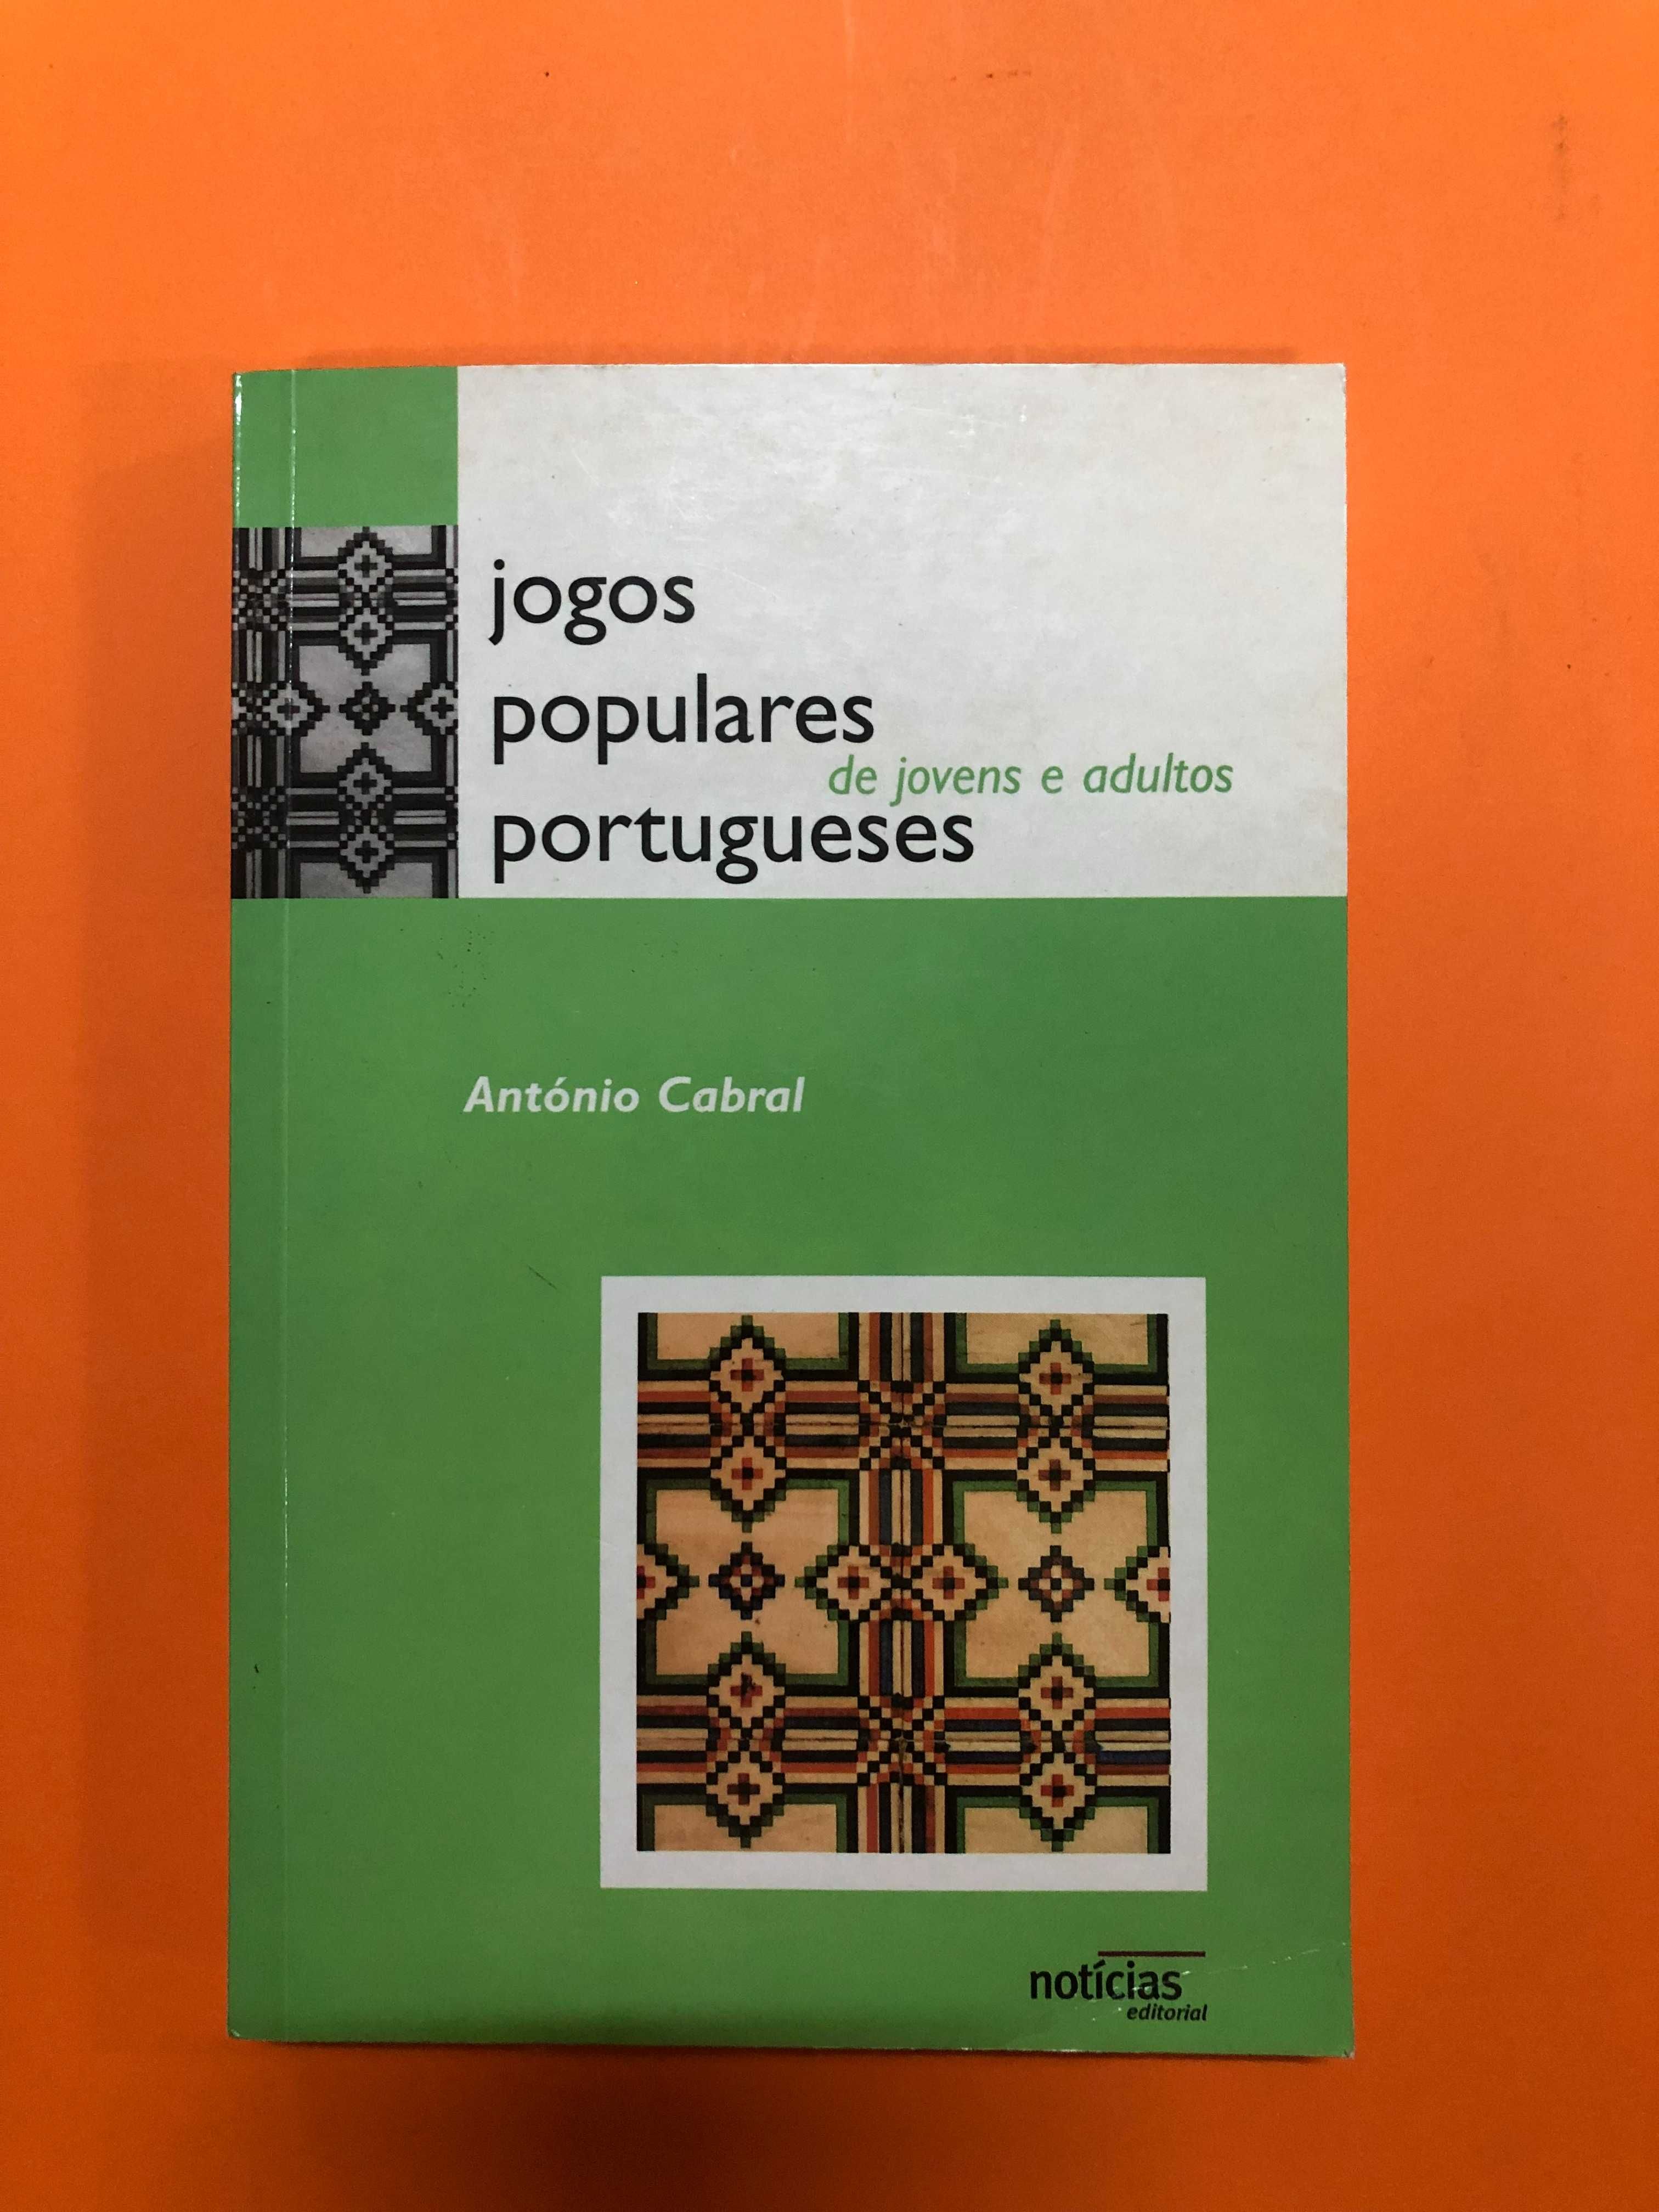 Jogos populares portugueses de jovens e adultos